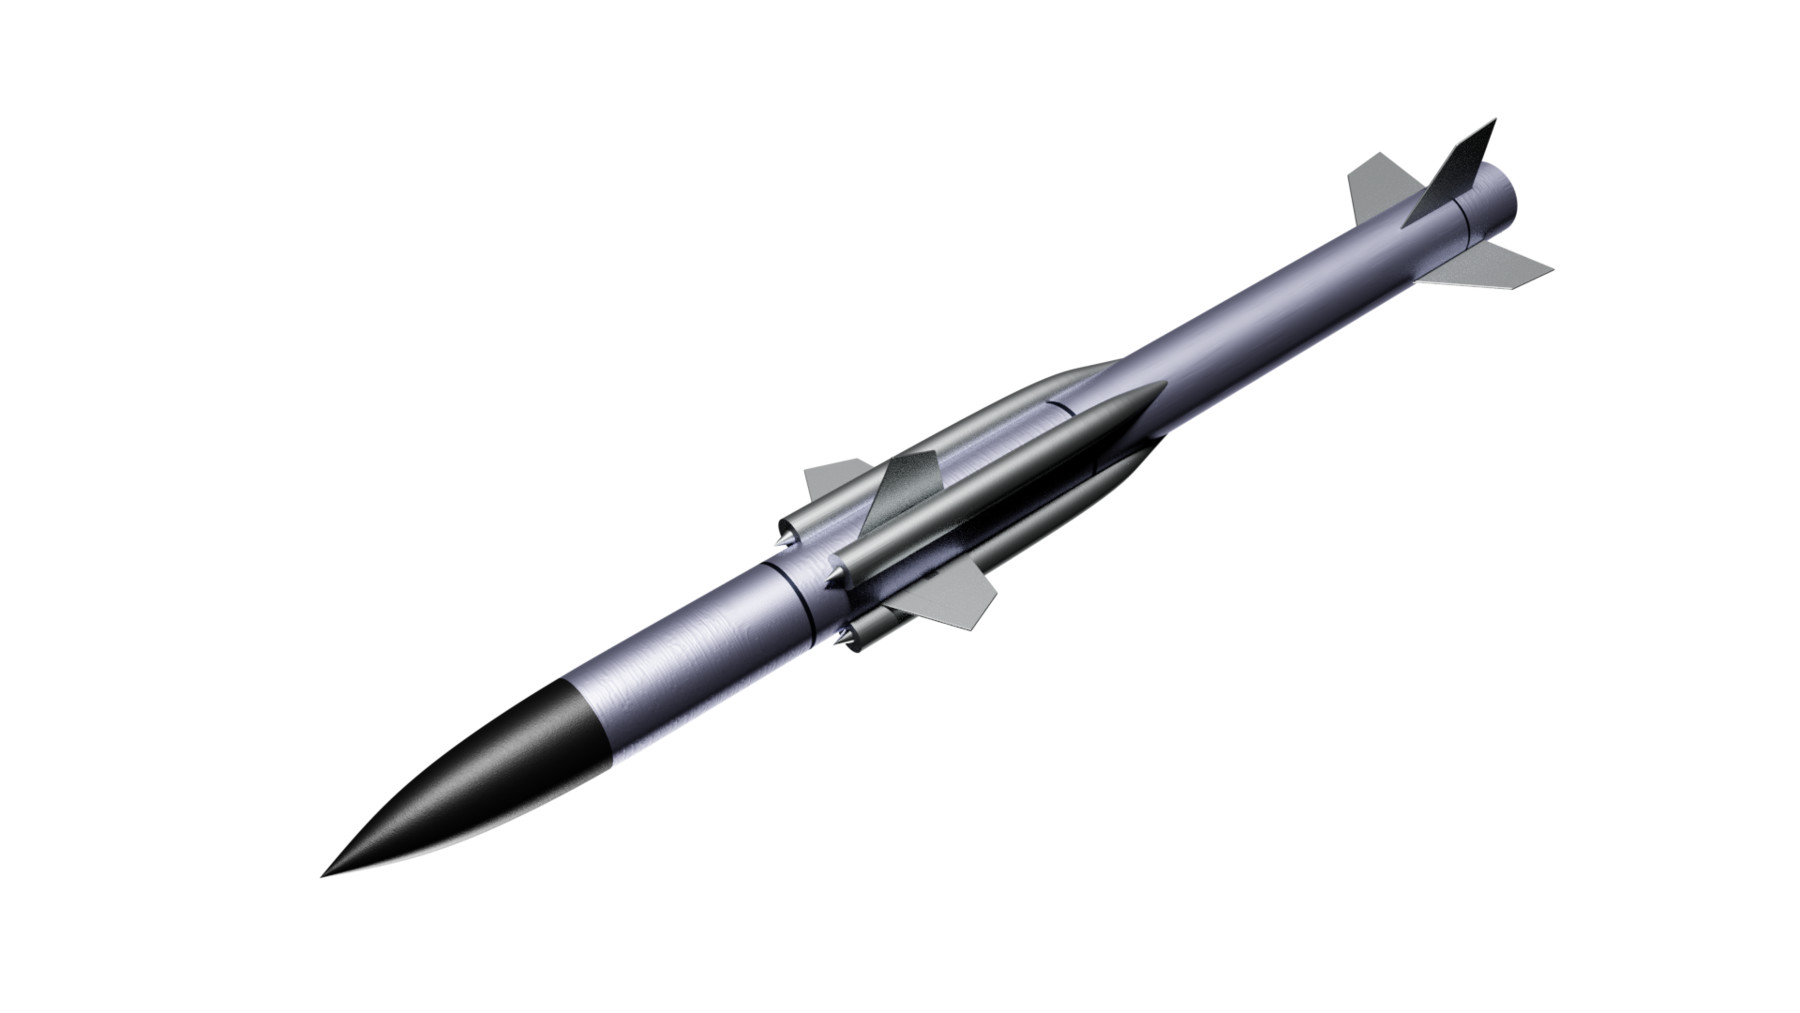 Missile Drawing Images  Free Download on Freepik